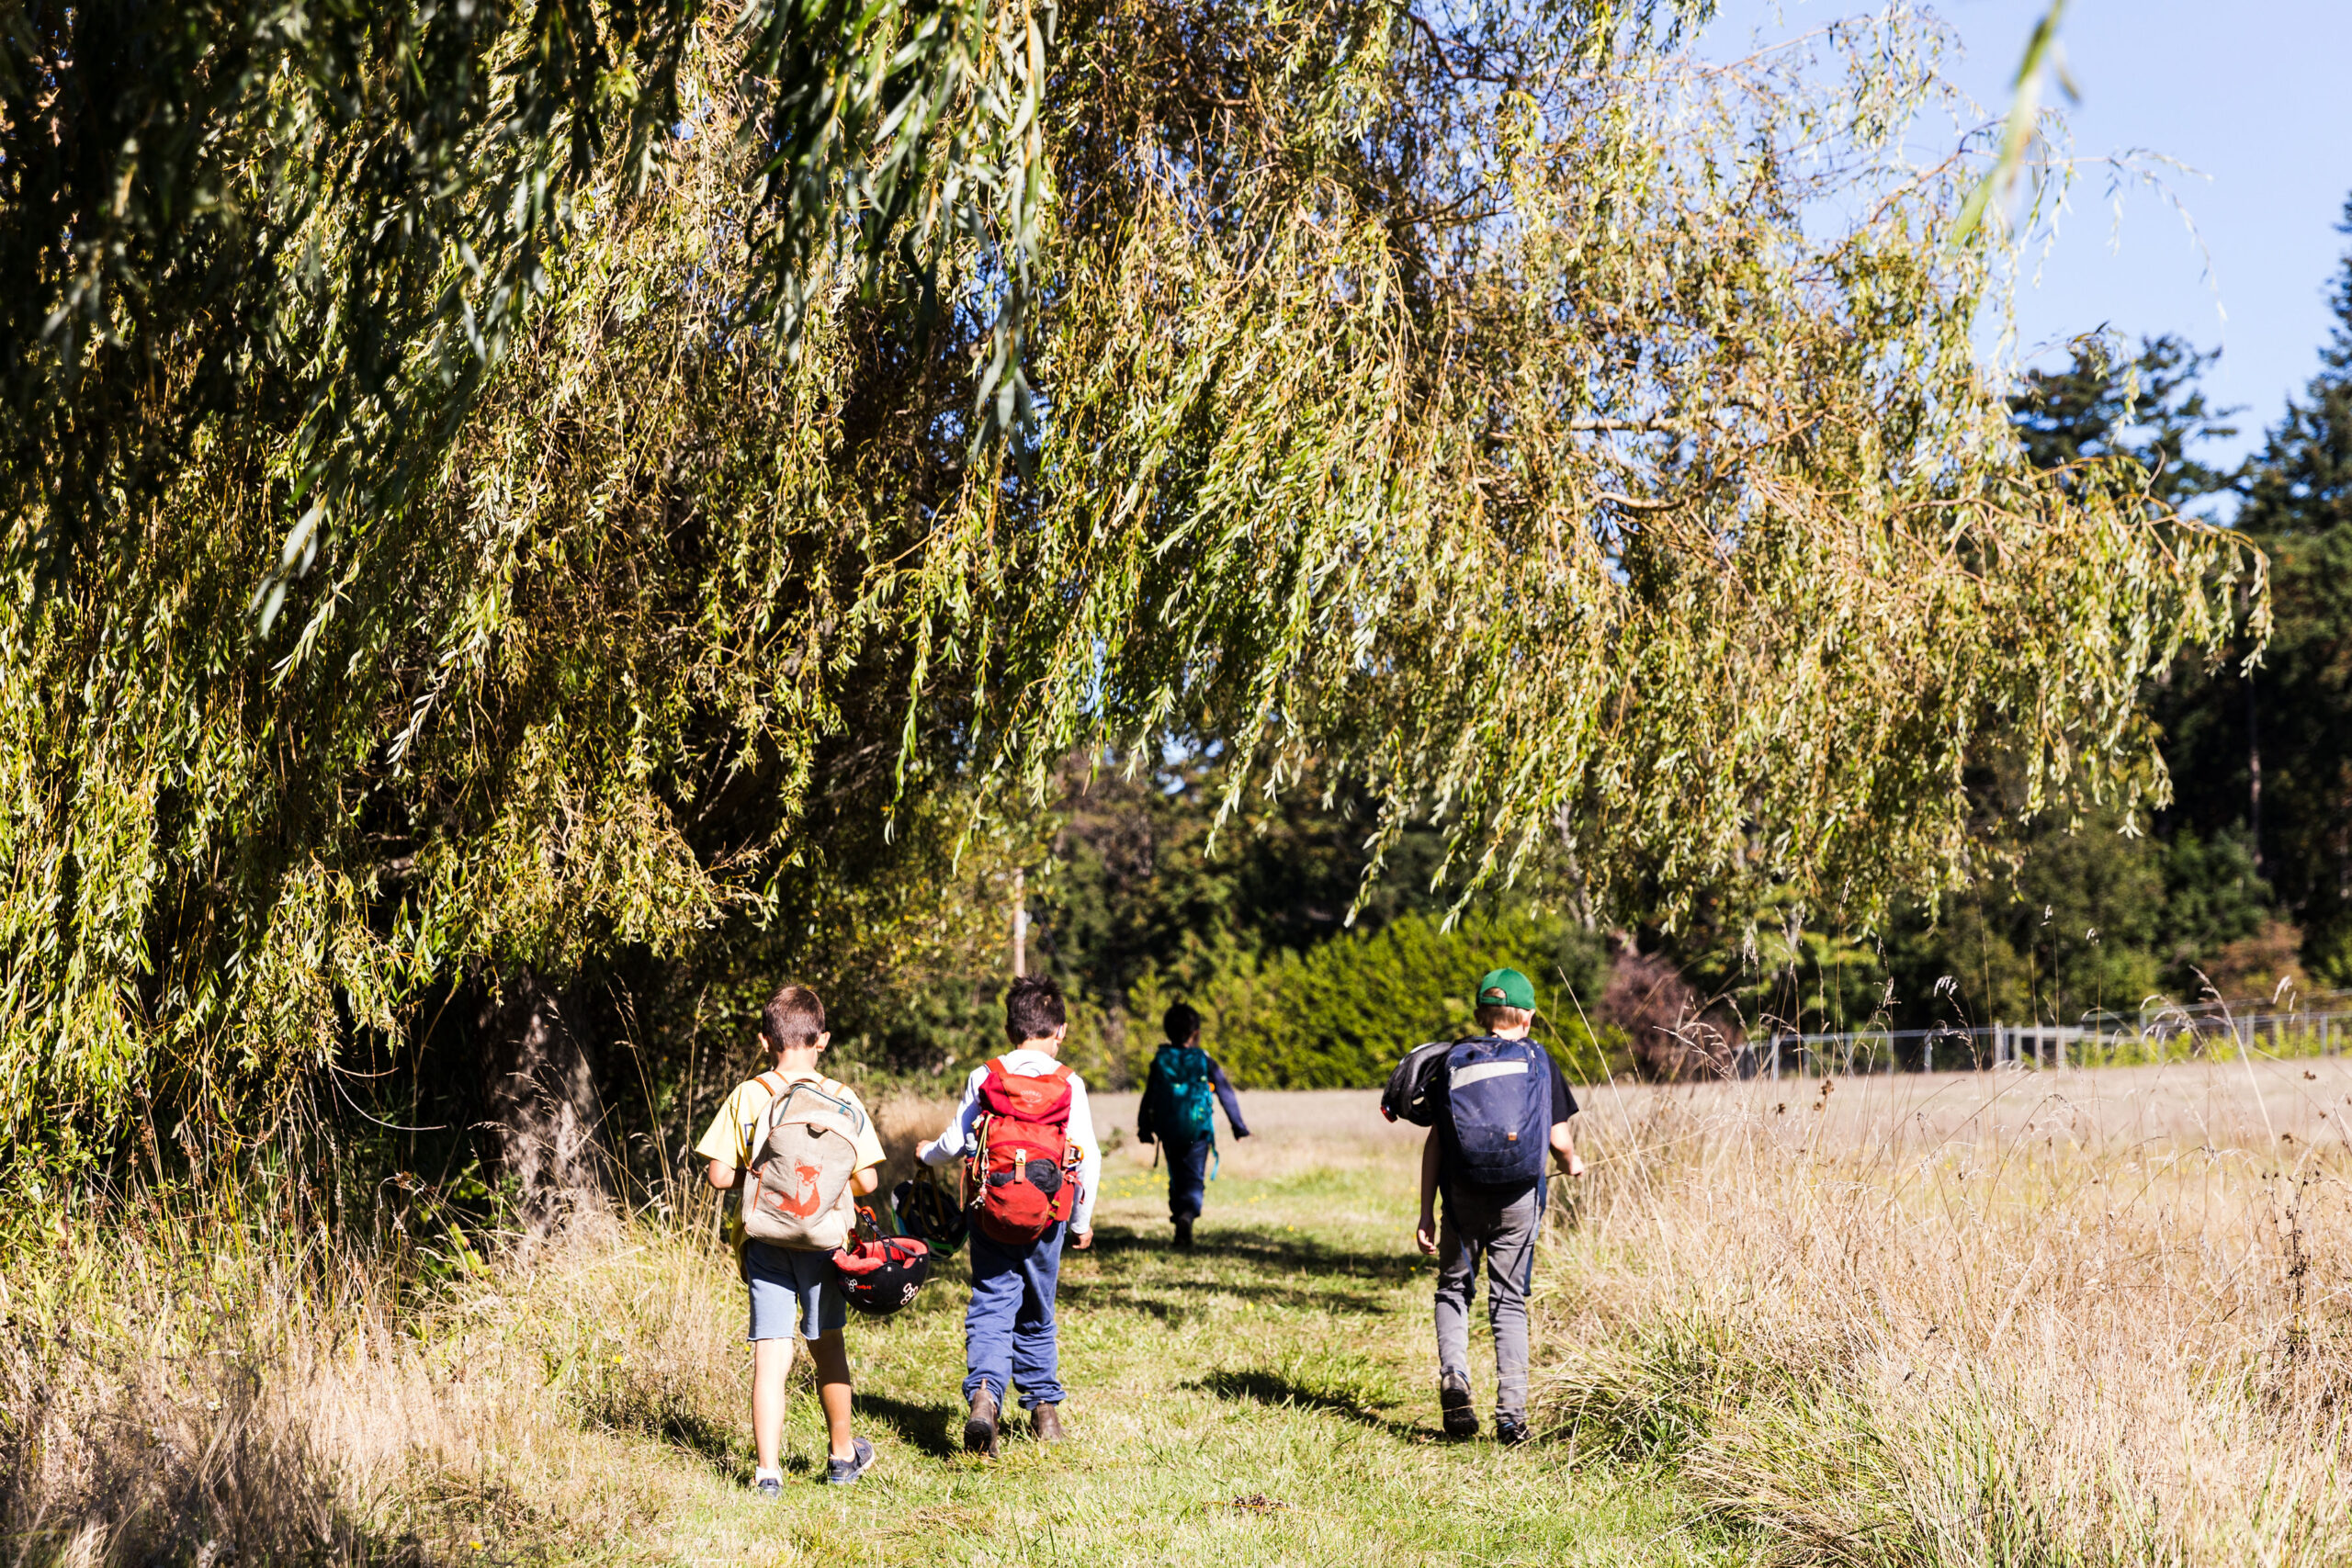 Four children walk through a grassy field on a sunny day